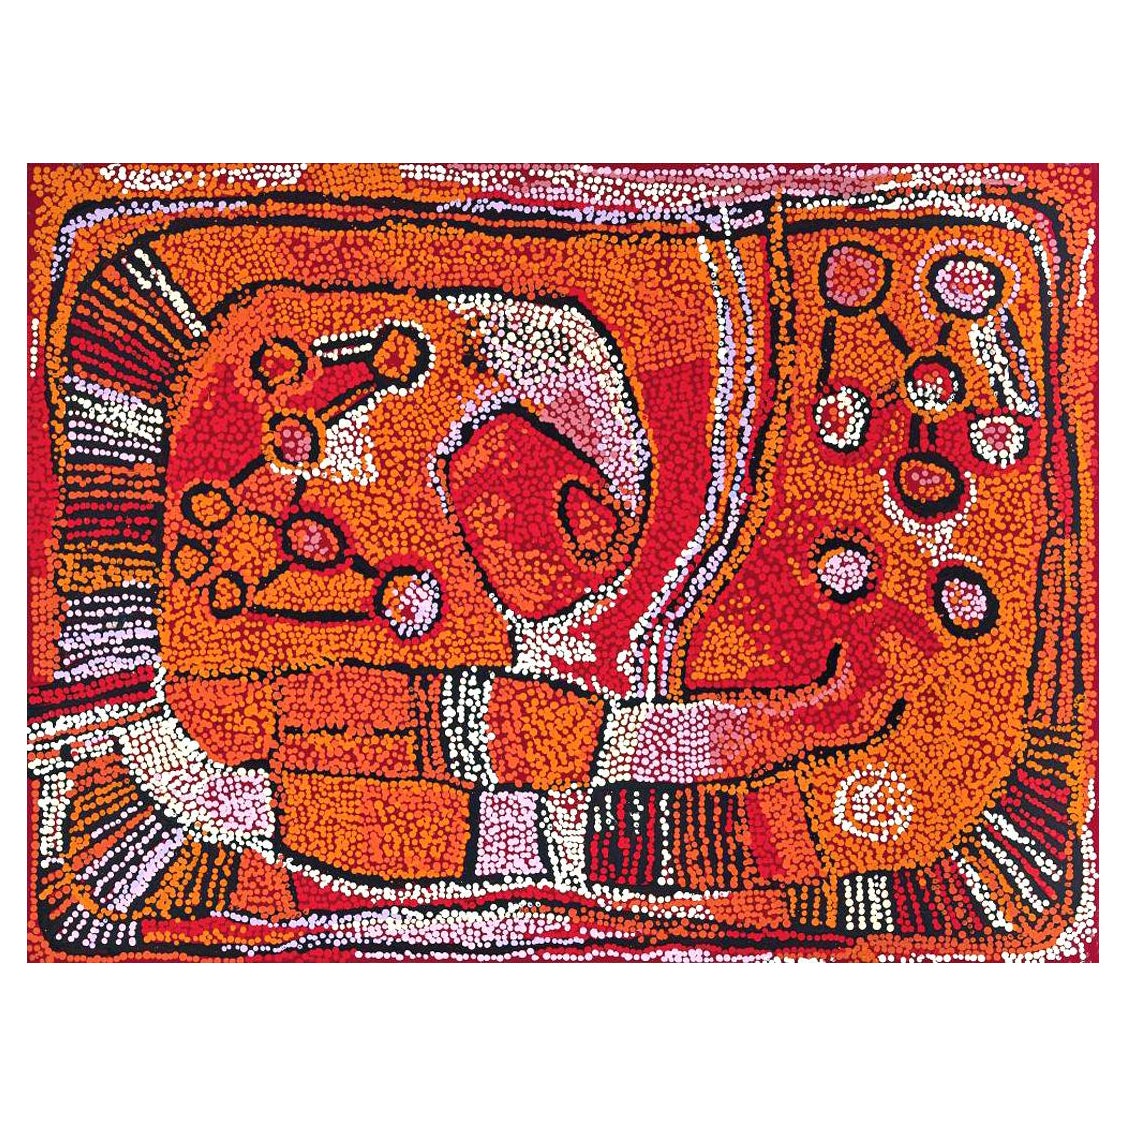 Contemporary Australian Aboriginal Painting by Naata Nungurrayi